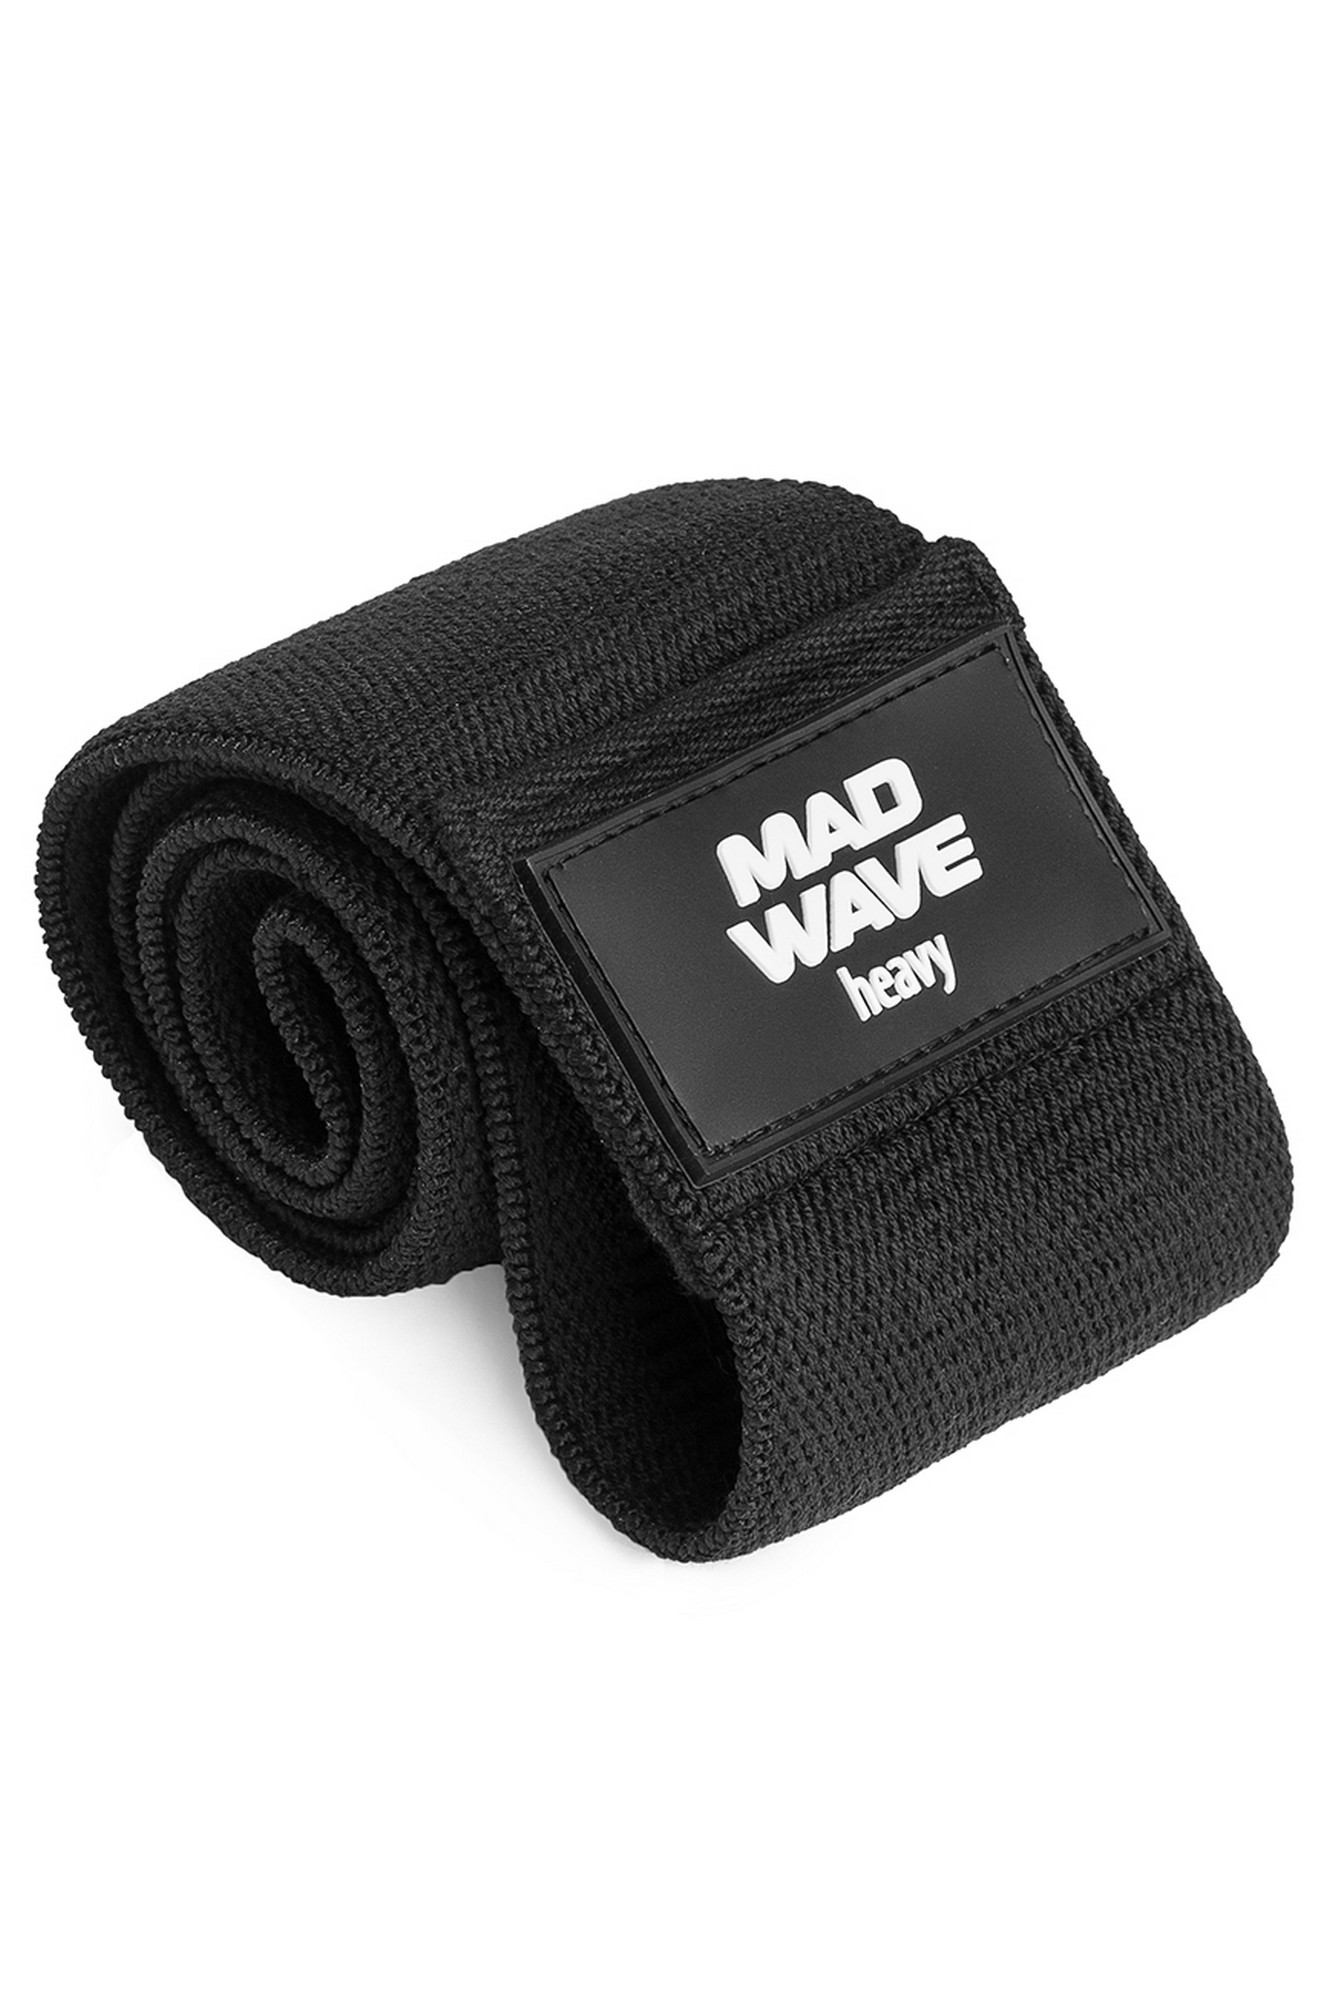 Эспандер Mad Wave Textile Hip Band M1330 02 3 00W